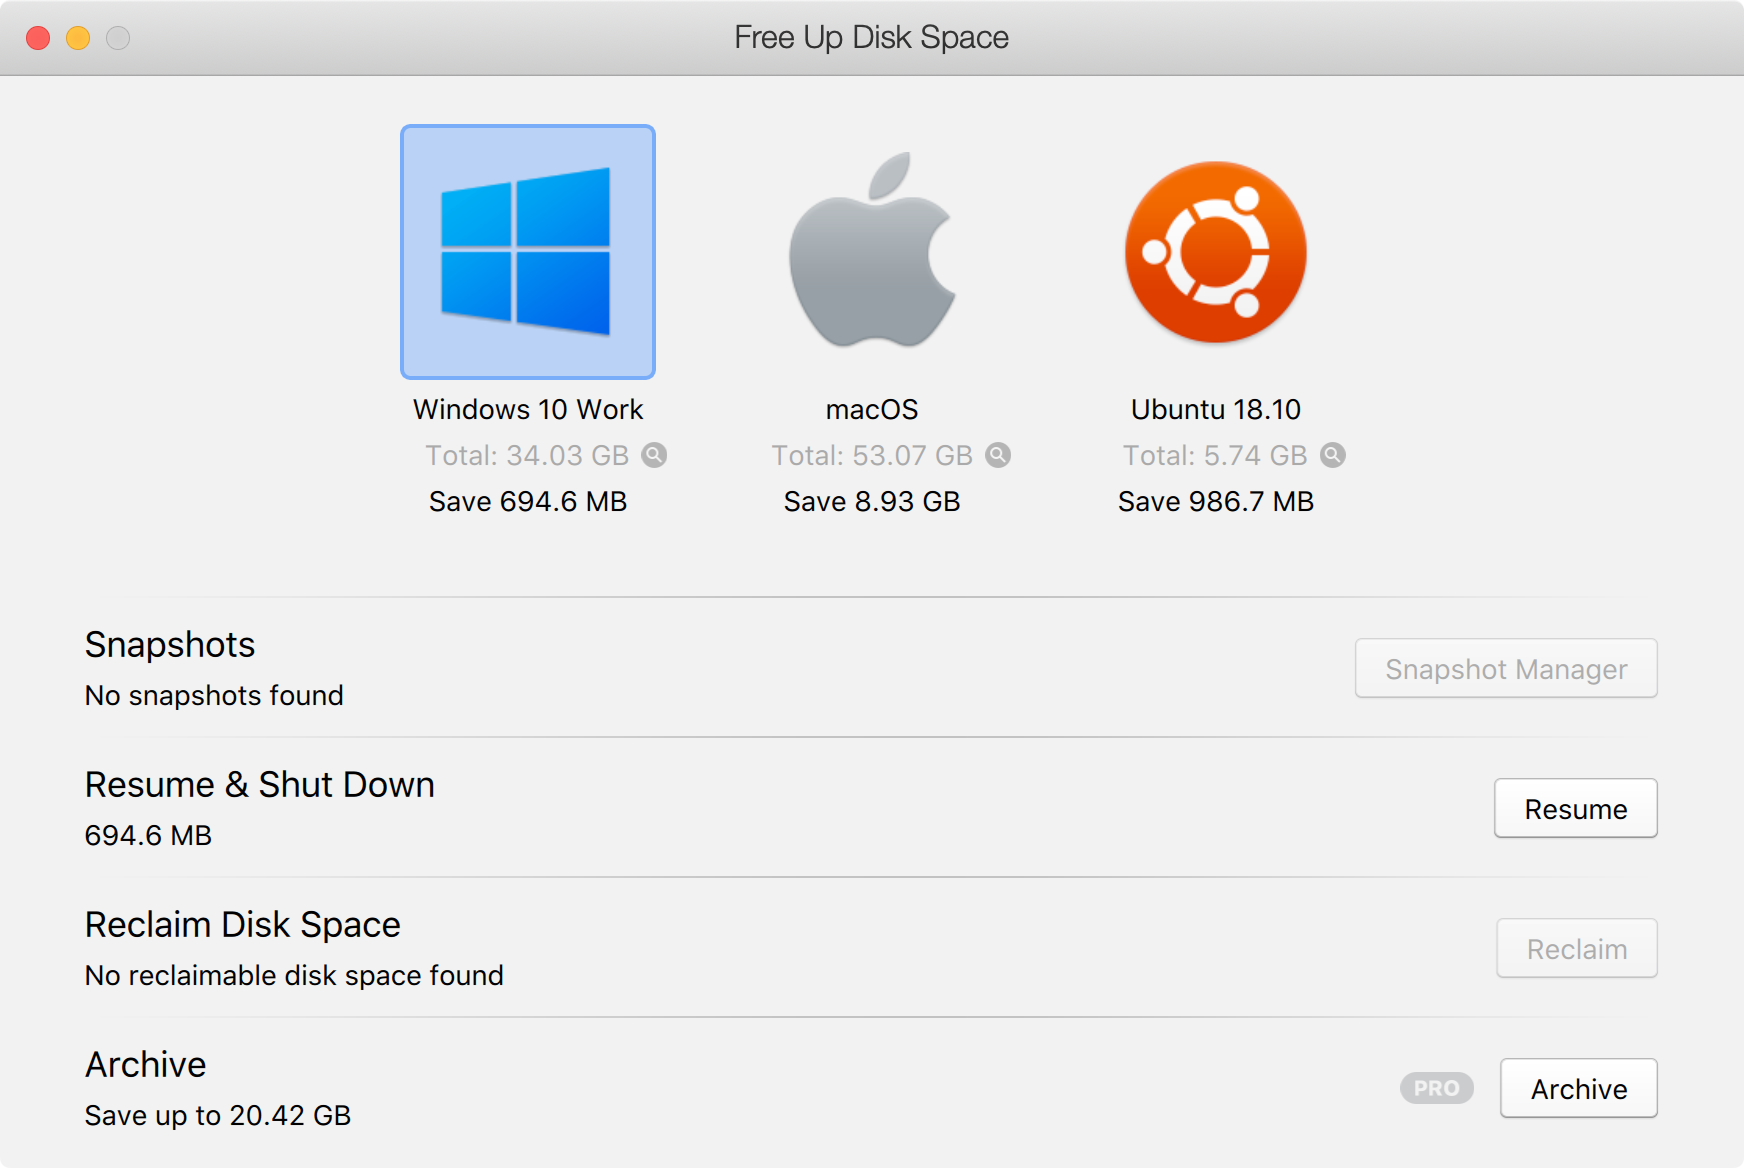 parallels desktop 17 for mac free